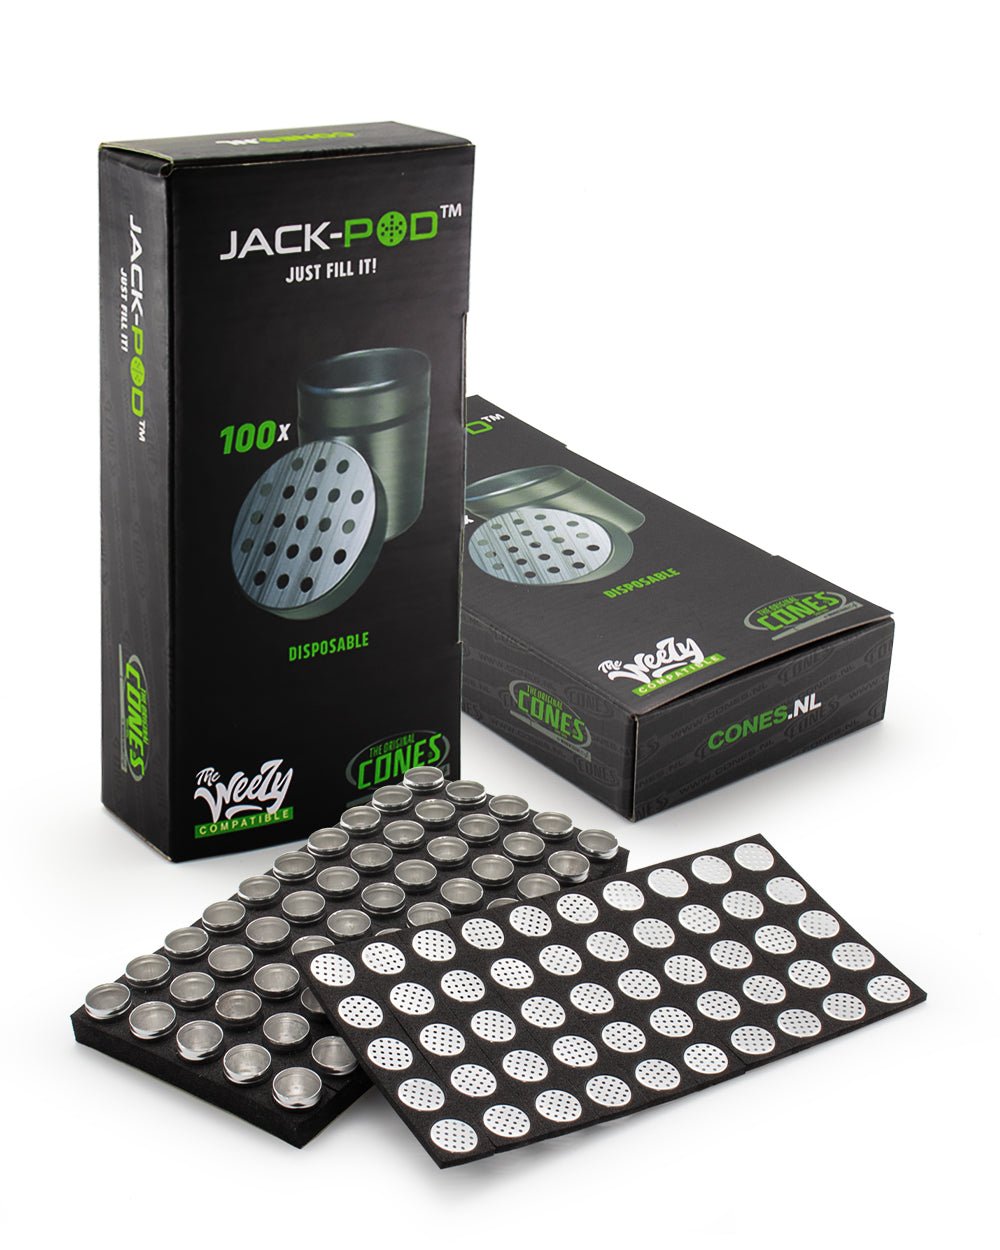 CTIP | Disposable Jack-Pod Capsules | 0.2 Grams - Aluminum - 100 Count - 1